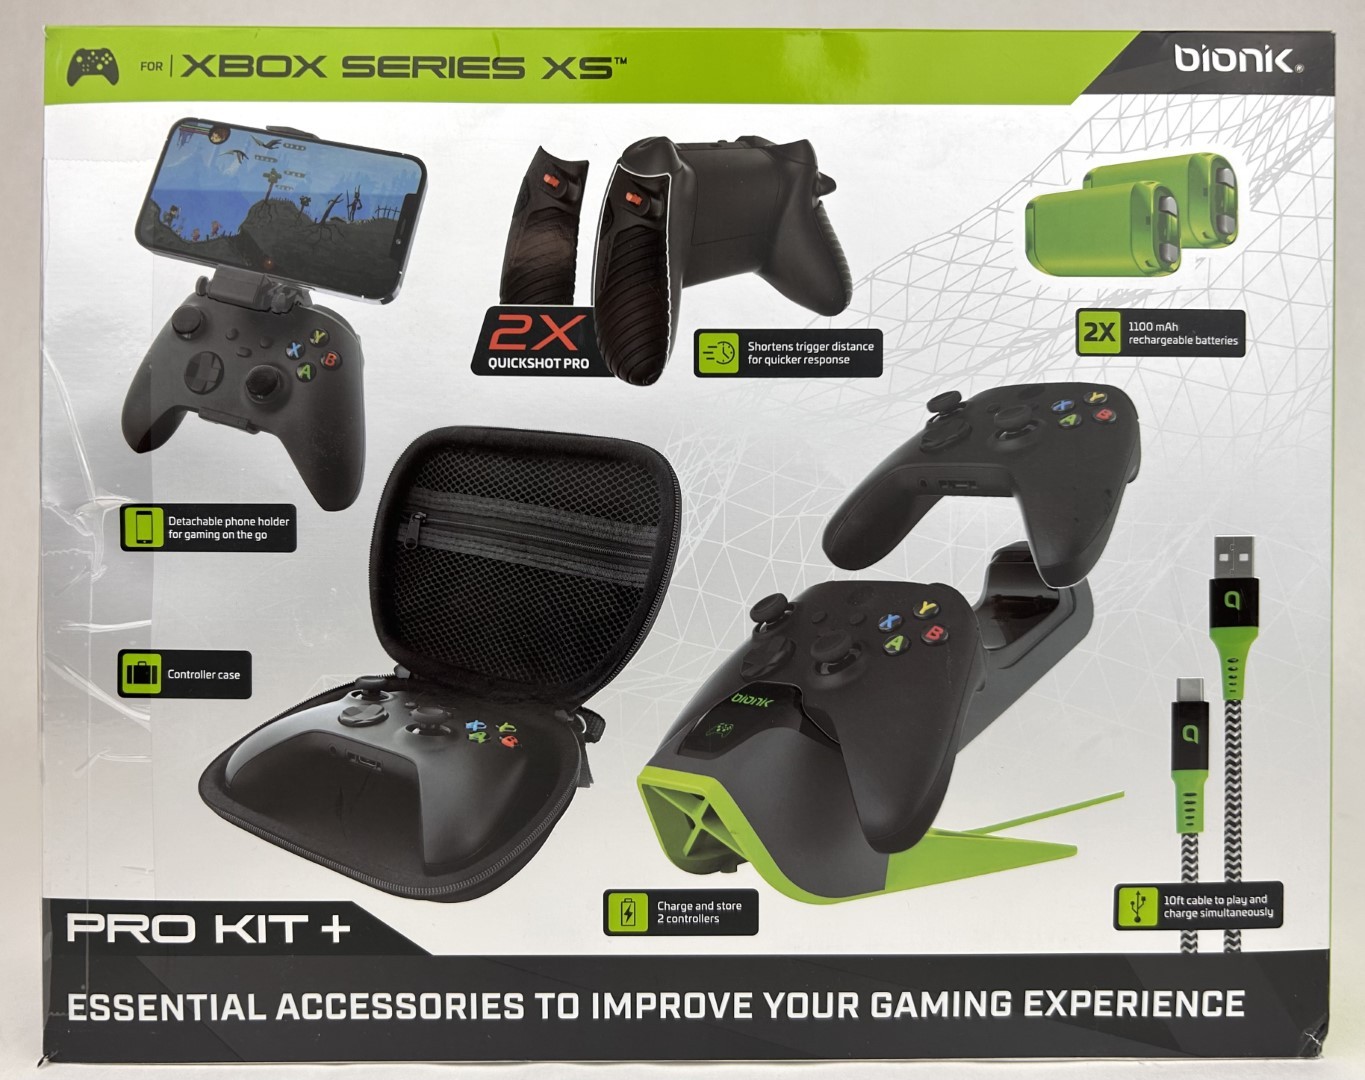 Bionik Xbox Series X/S Pro Kit + 2x Quickshot Pro 1100 mAh Batteries Station